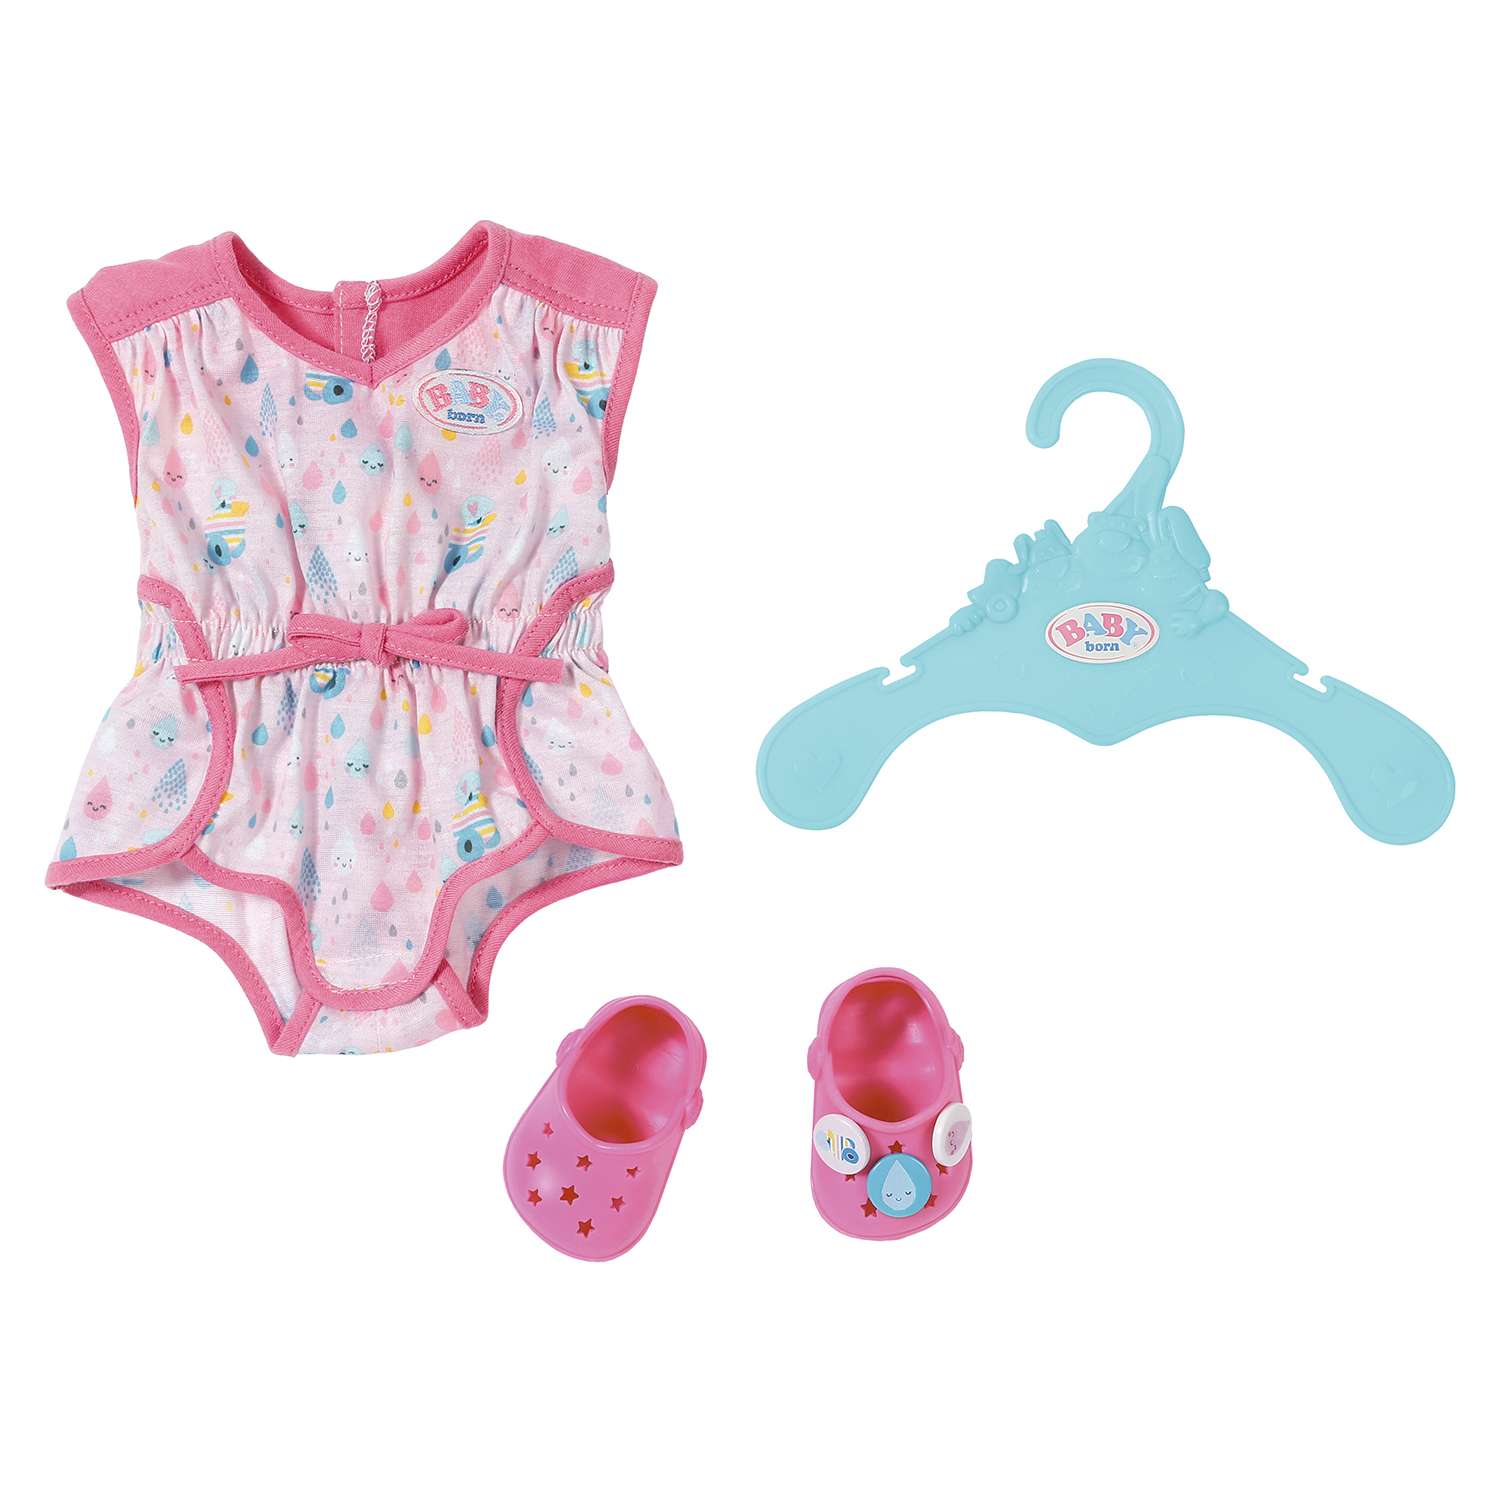 Одежда для куклы Zapf Creation Baby born Пижамка с обувью 824-634 824-634 - фото 1